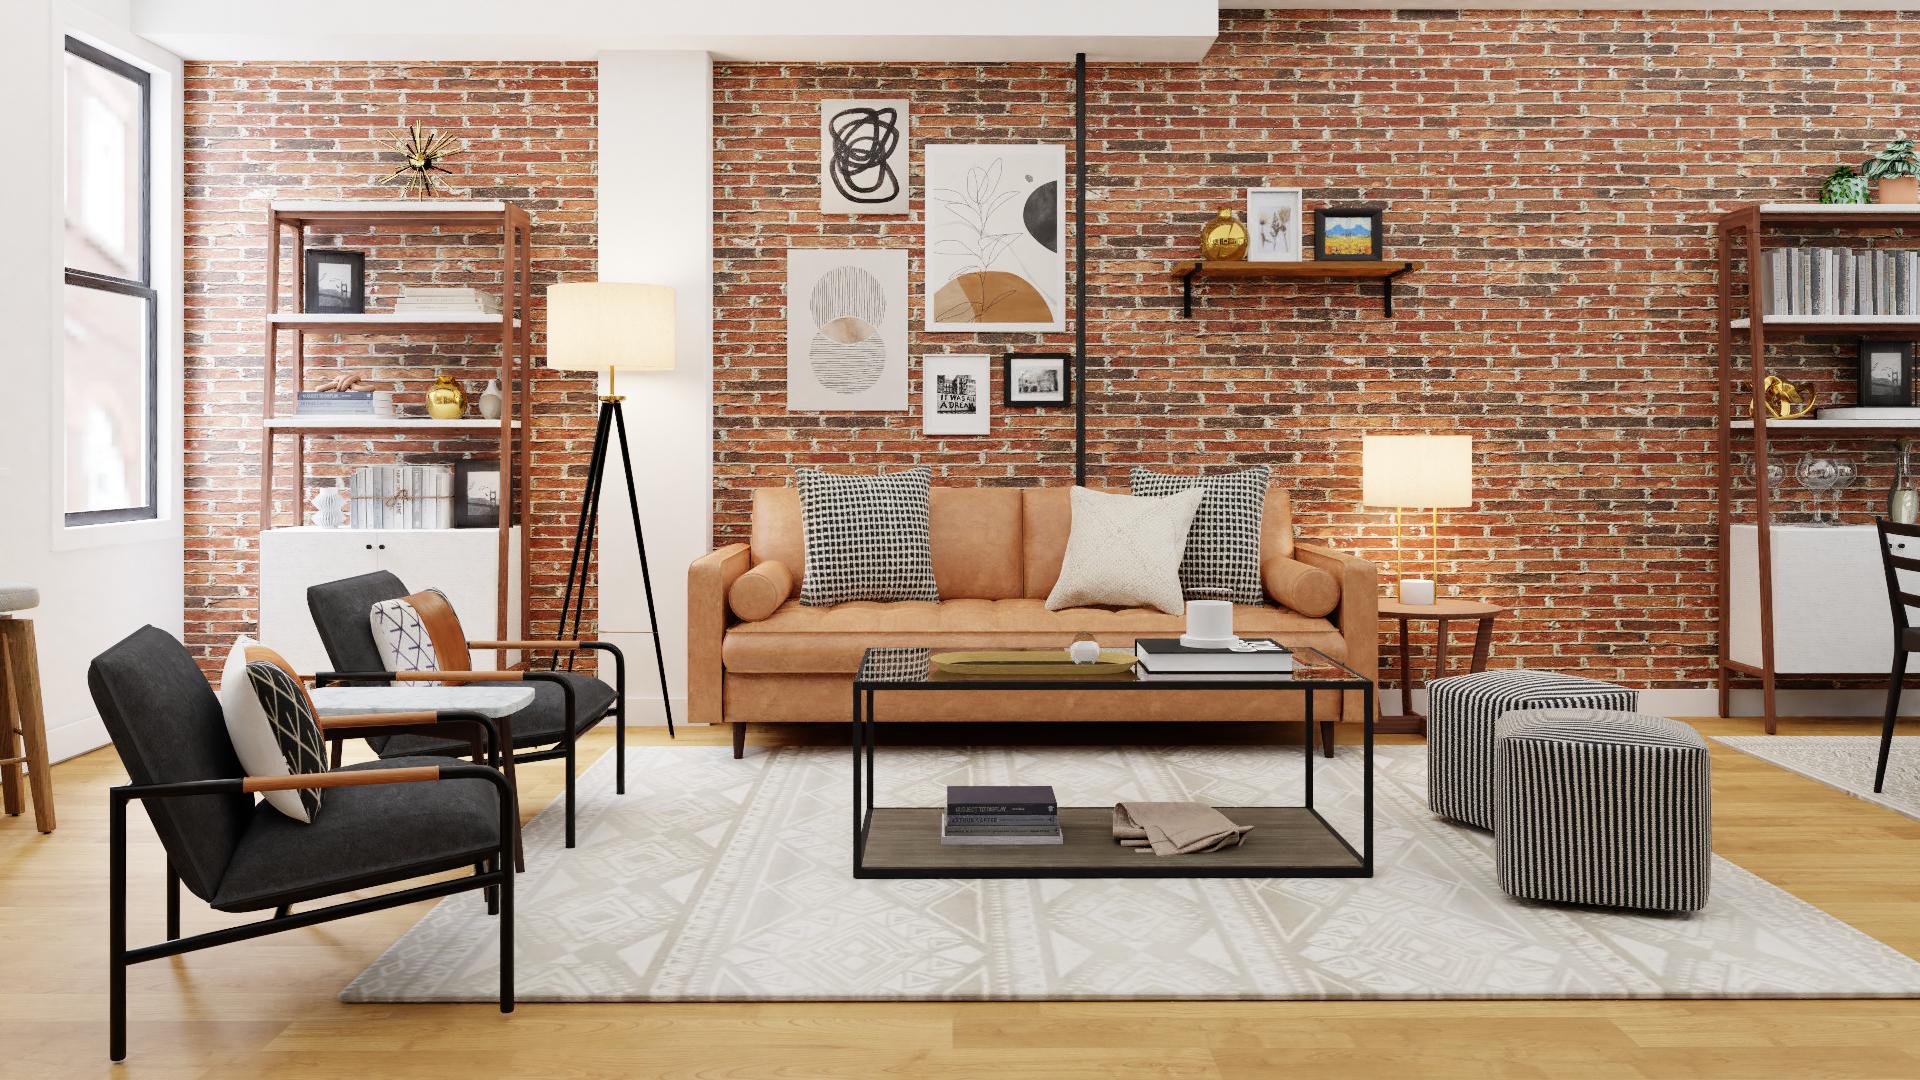 Brick Walls: Mid-Century Industrial Open Living Room